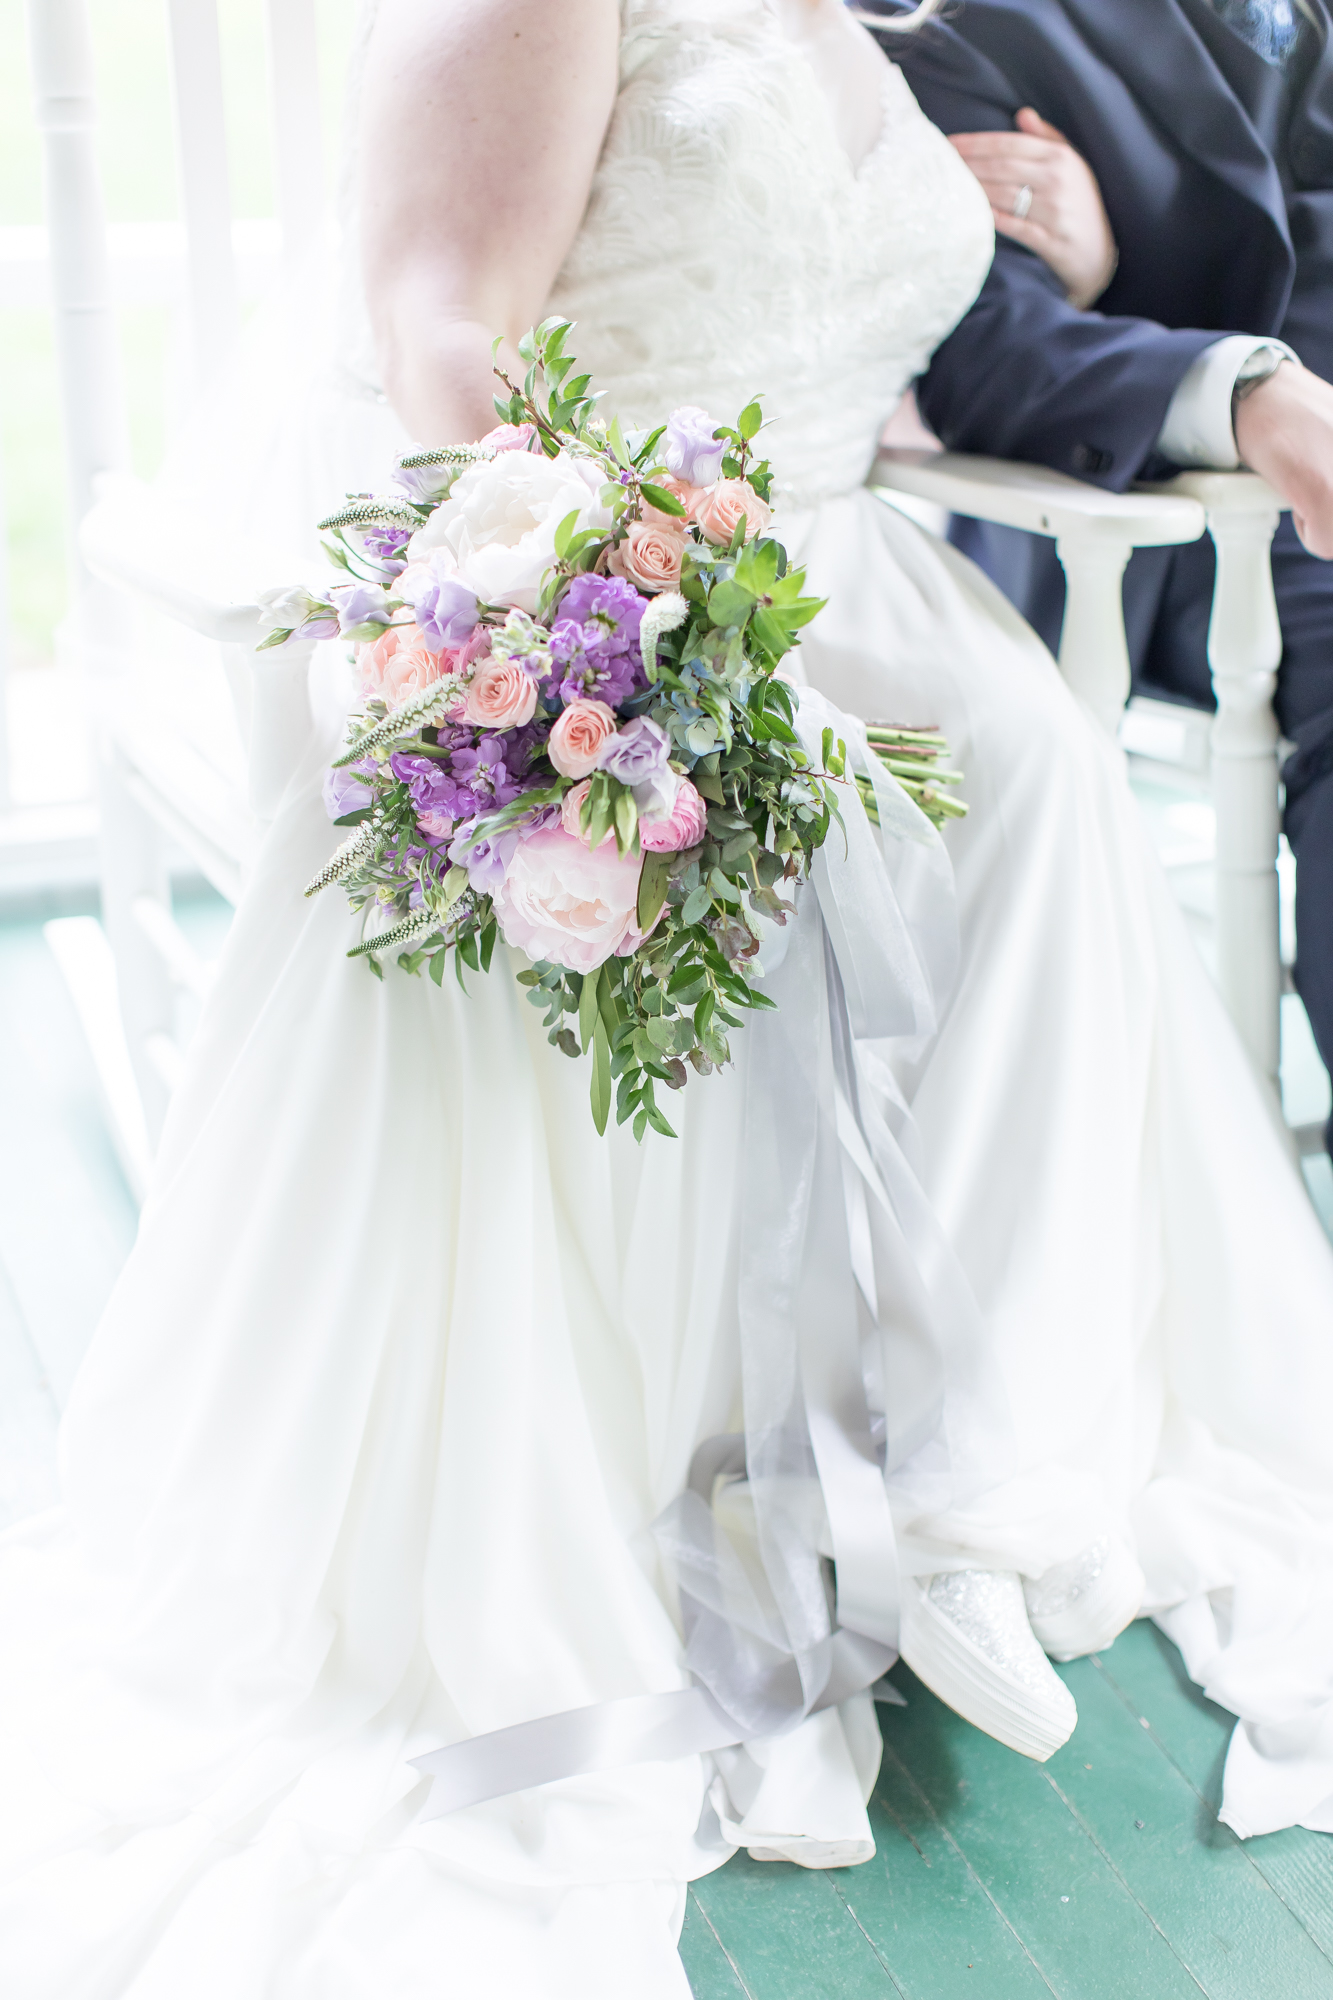 Weaver House of Pine Bend Park - Michigan Garden Wedding - The Overwhelmed Bride Wedding Blog